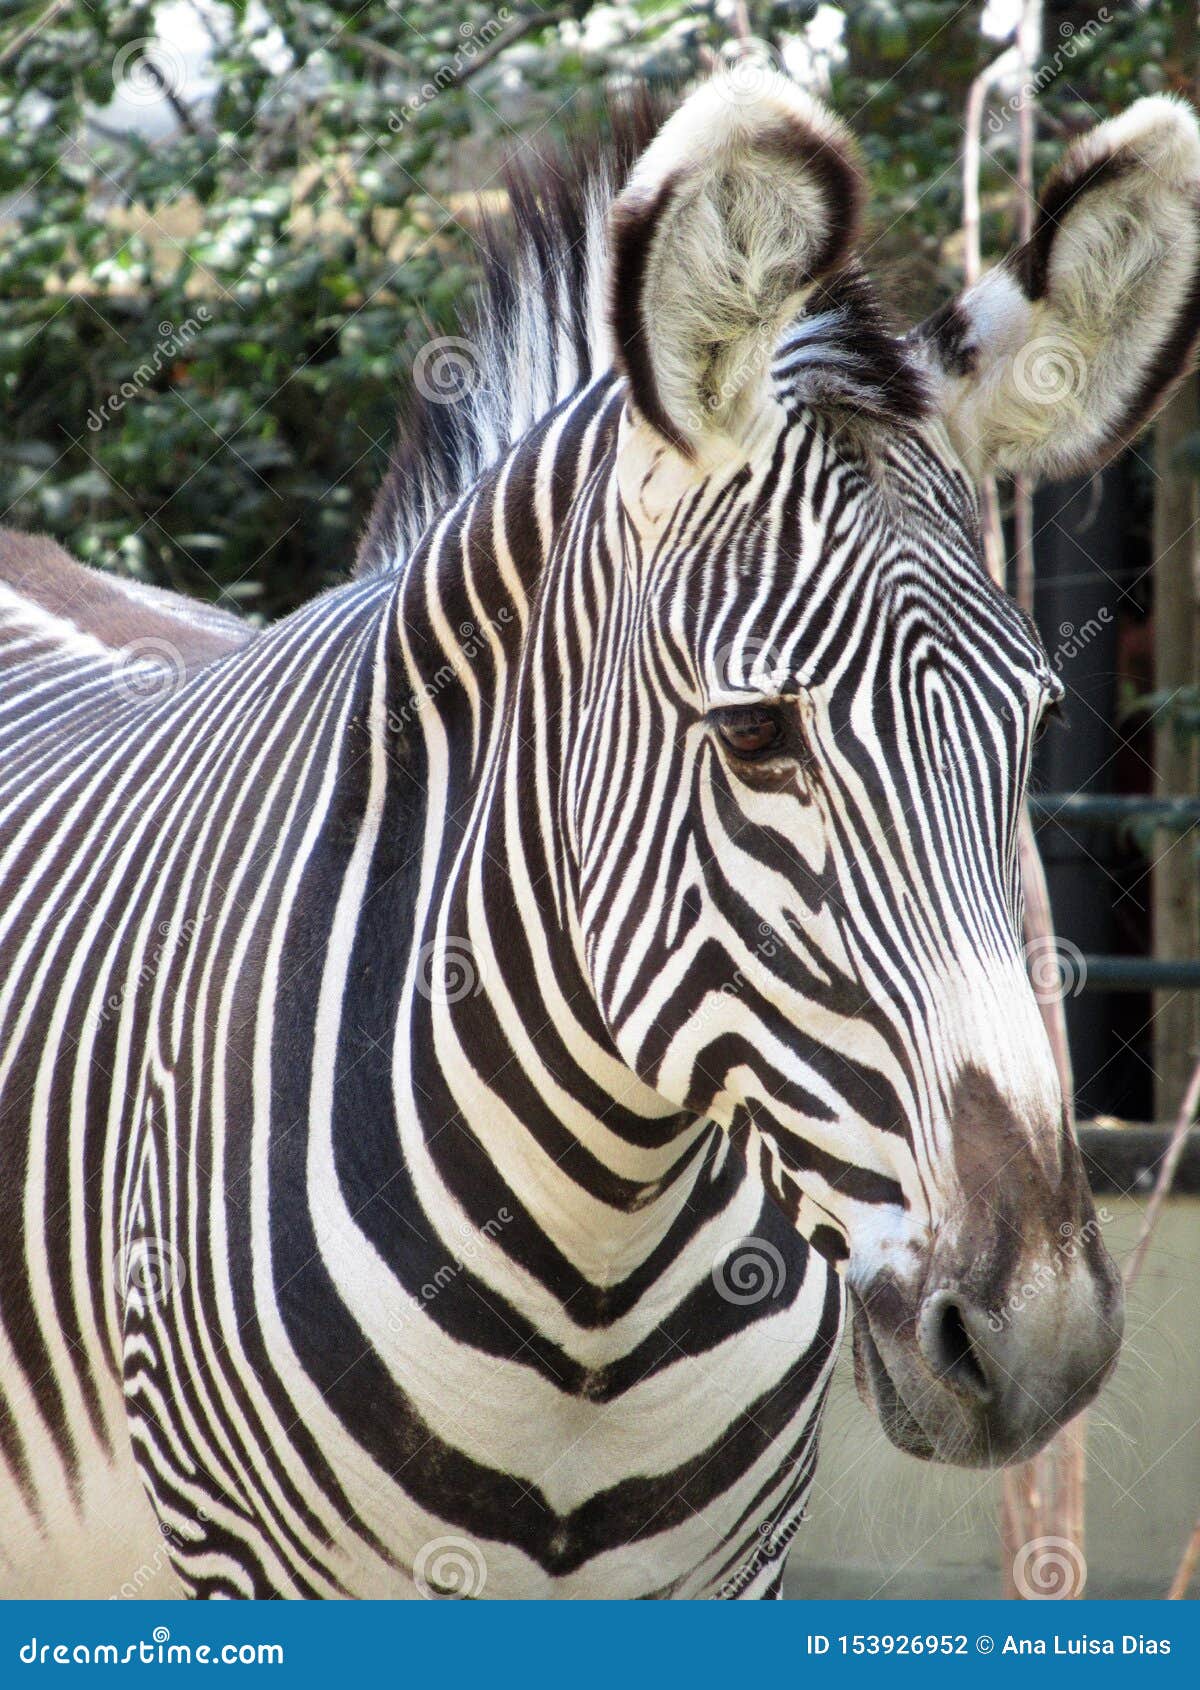 Zebra Closeup Black And White Stripes Stock Photo Image Of Hair Animals 153926952